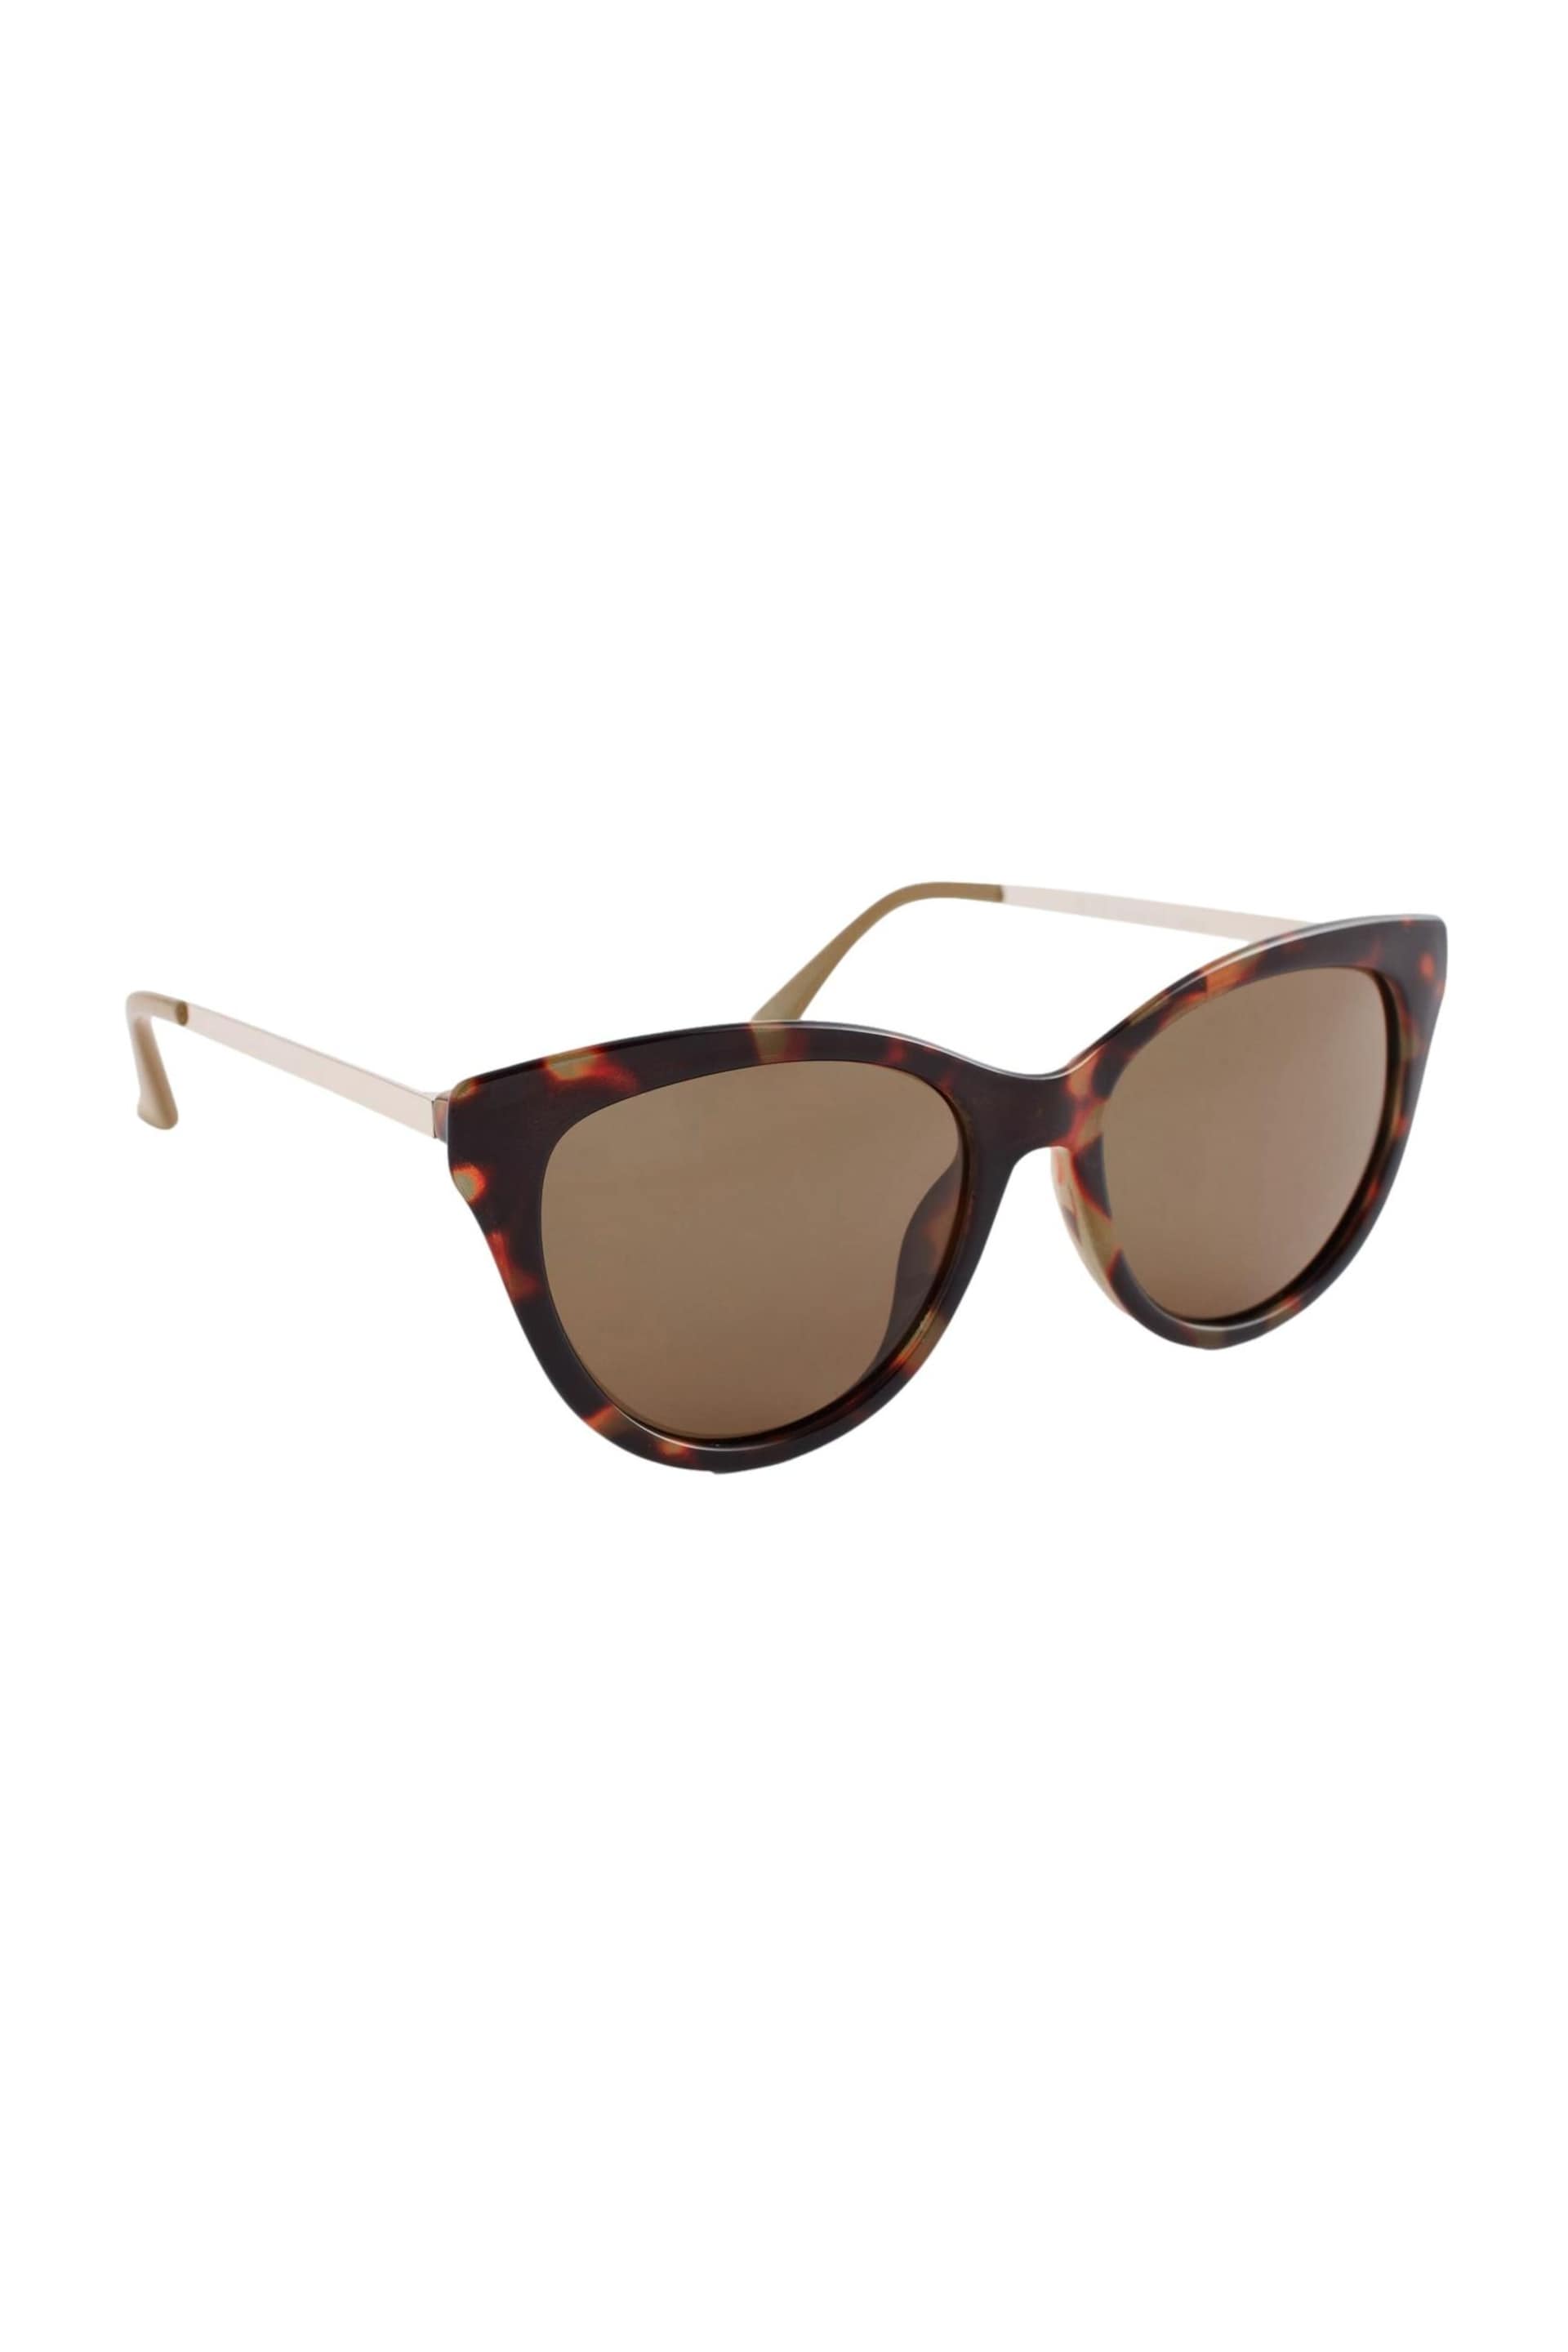 Brown/Cream Polarised Cat Eye Sunglasses - Image 3 of 7